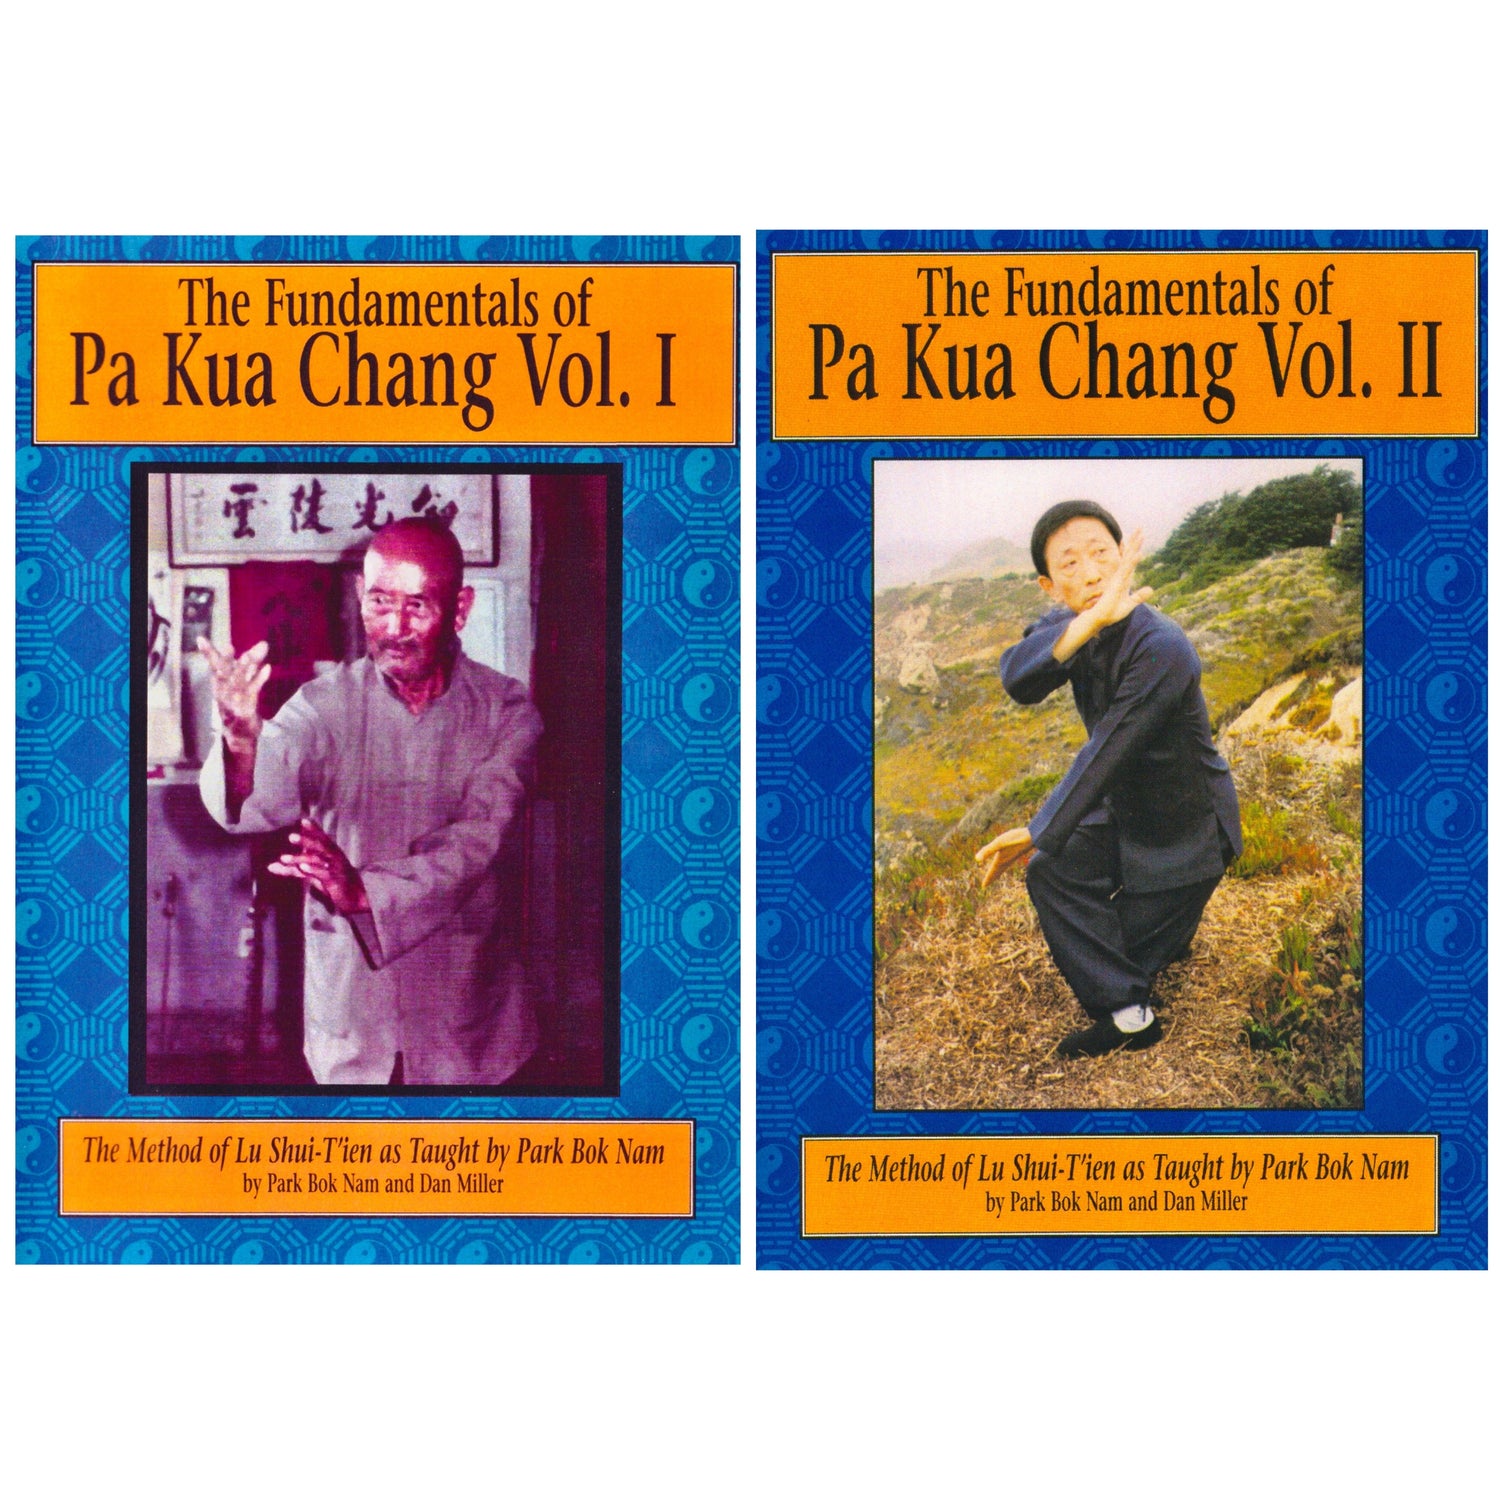 The Fundamentals of Pa Kua Chang 2 DVD Set by Park Bok Nam - Budovideos Inc